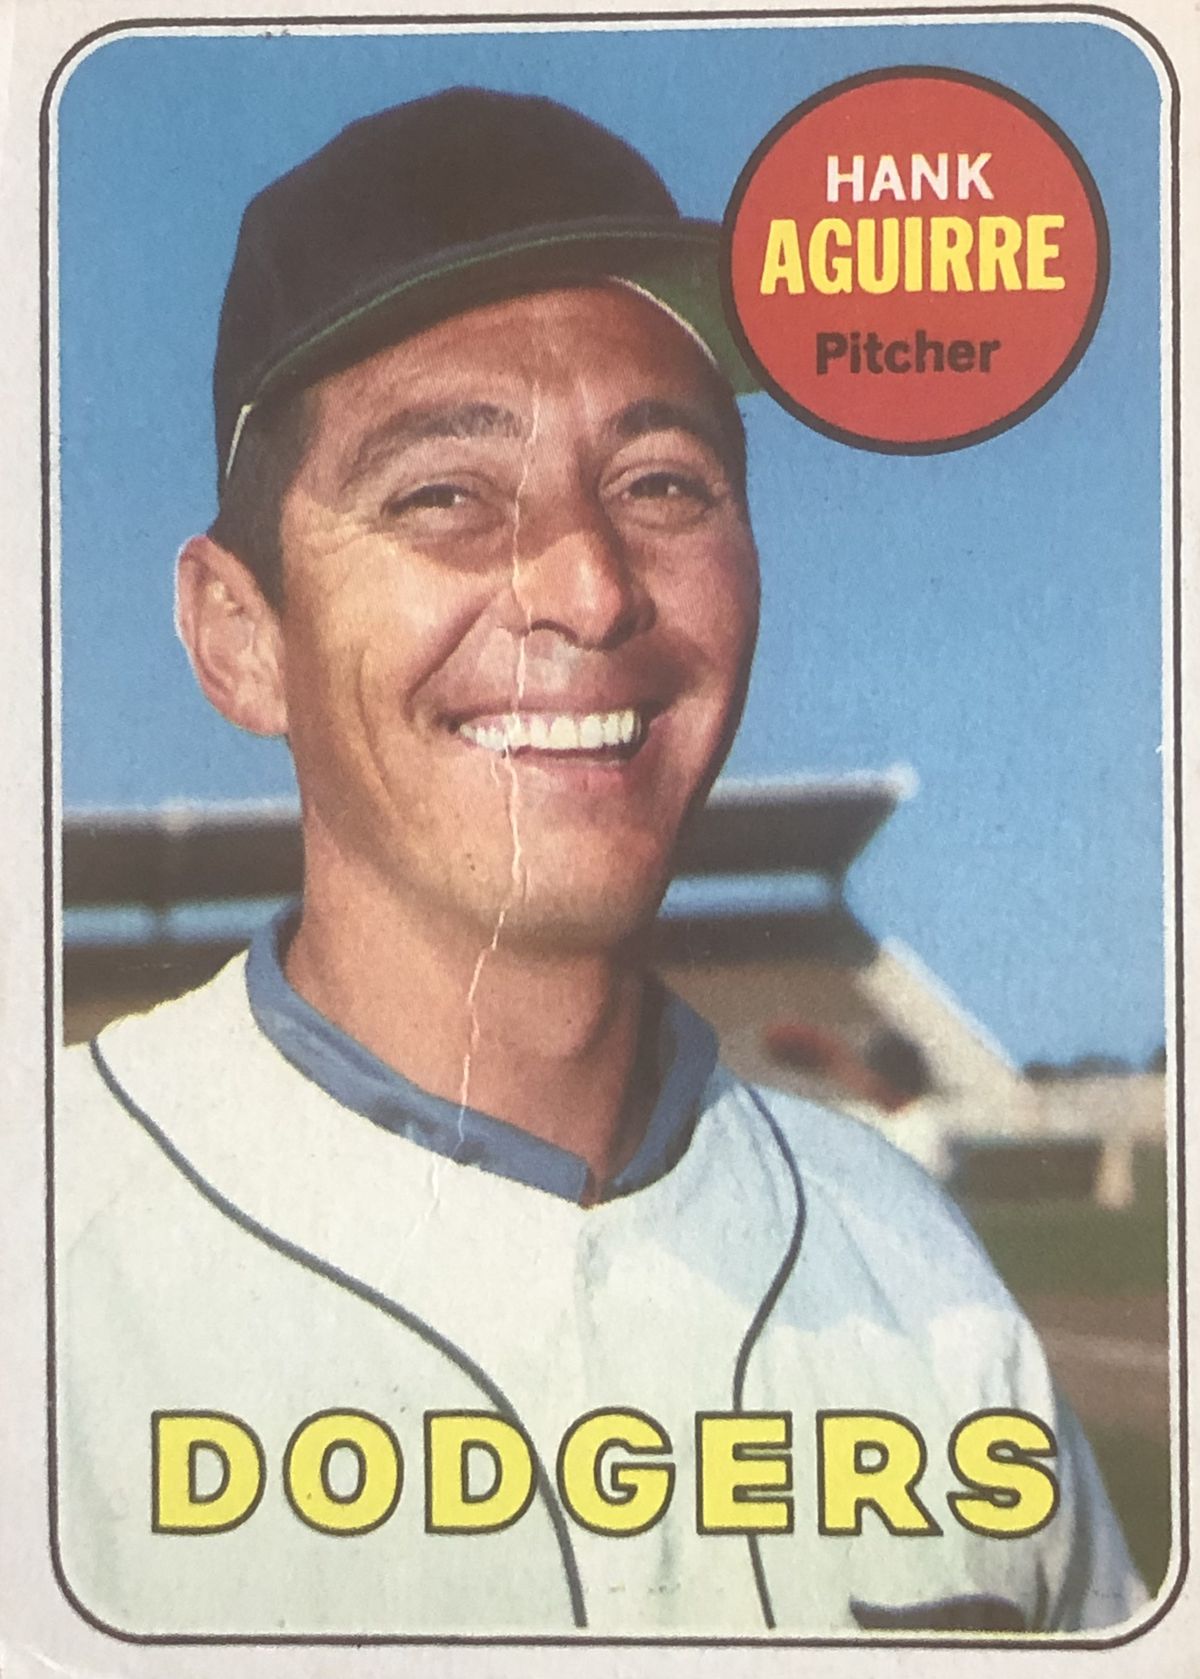 Hank Aguirre’s 1969 Topps baseball card